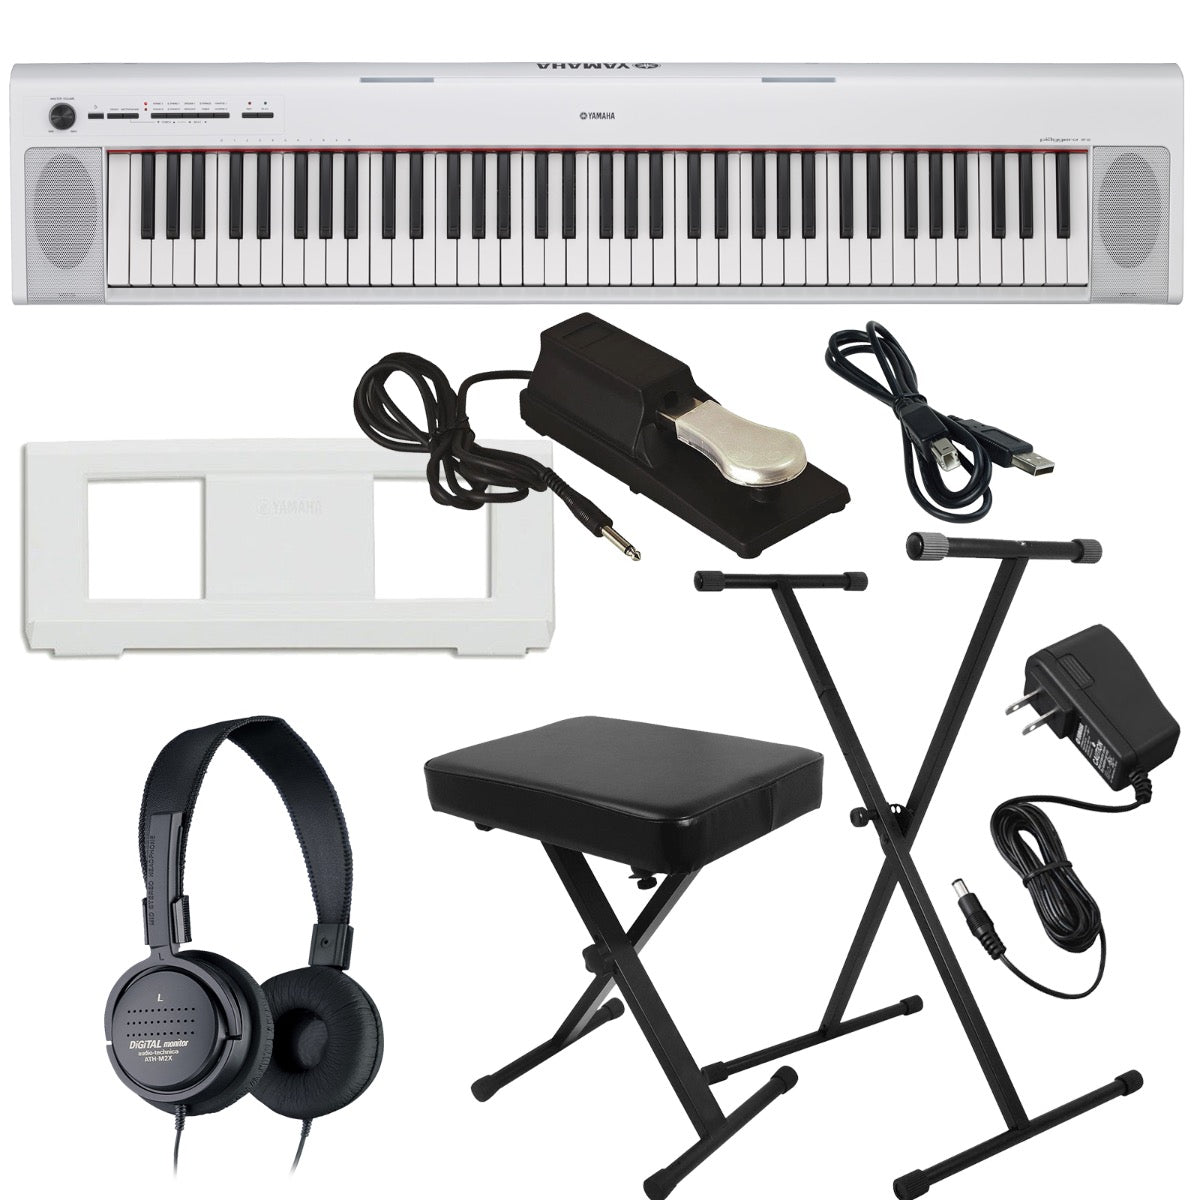 Yamaha Piaggero NP32 76-Key Portable Keyboard with Power Adapter - White  KEY ESSENTIALS BUNDLE